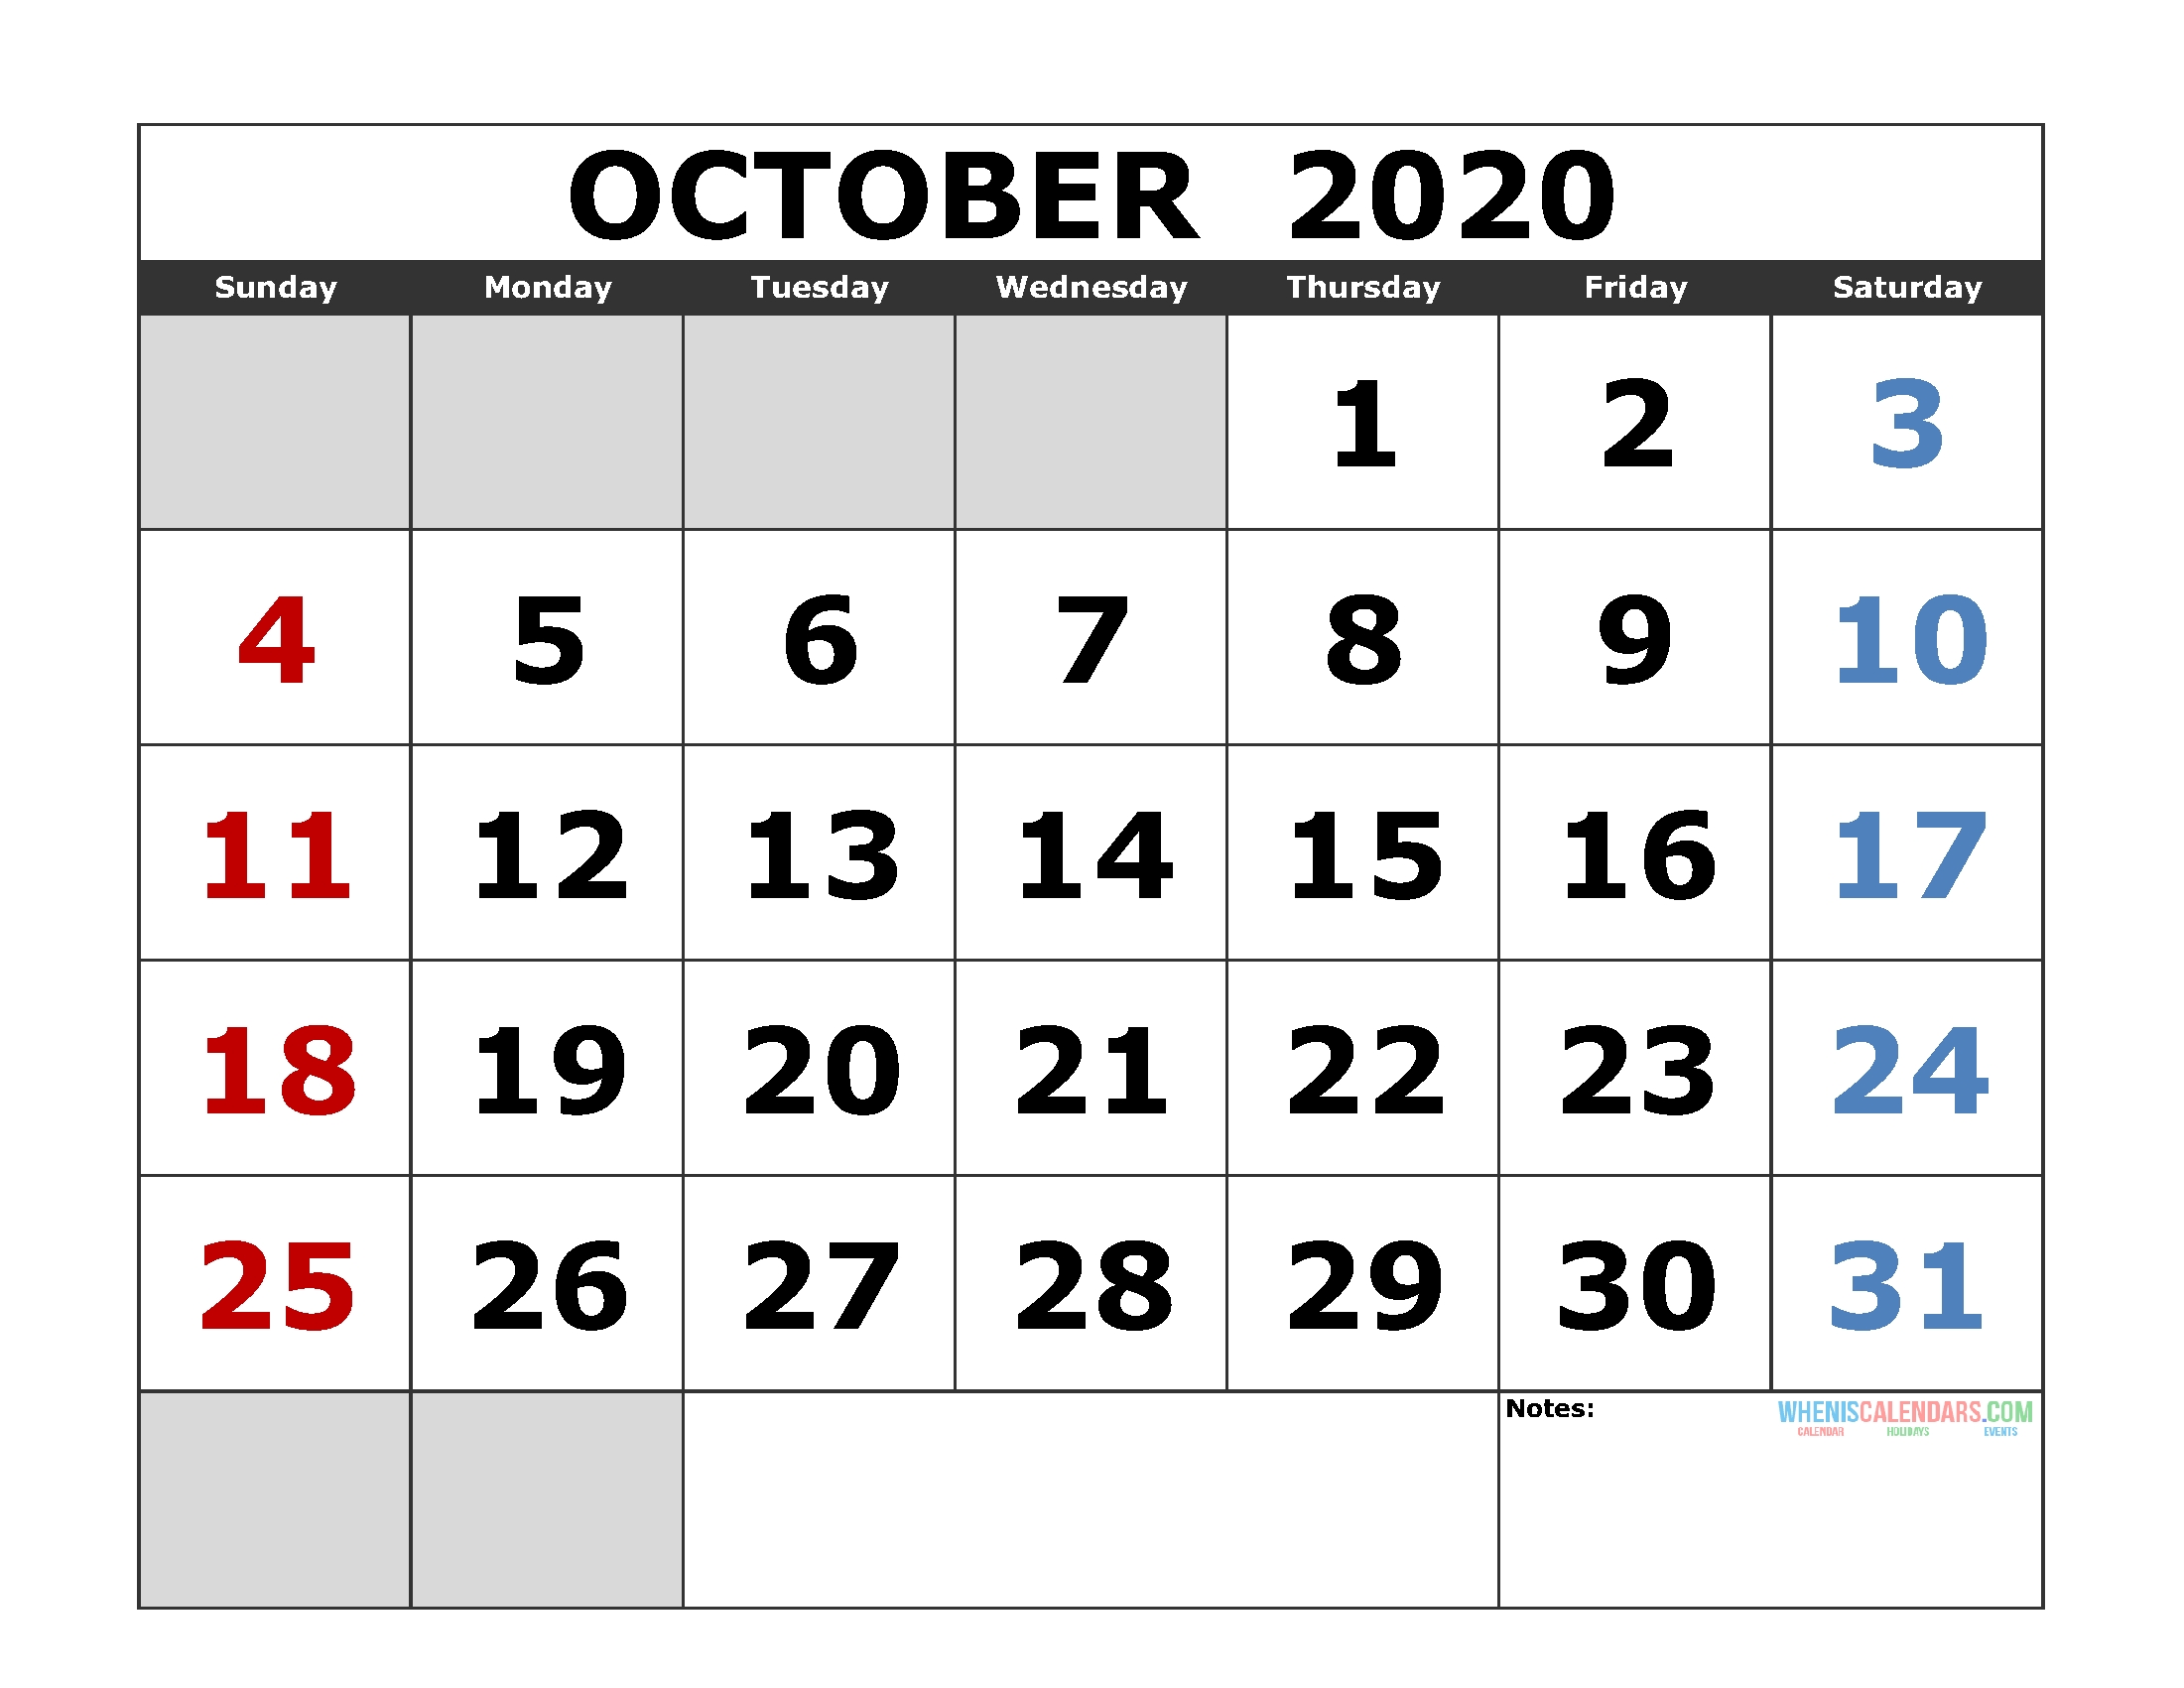 October 2020 Printable Calendar Template Excel, Pdf, Image-October 2020 Calendar Holidays Jewish